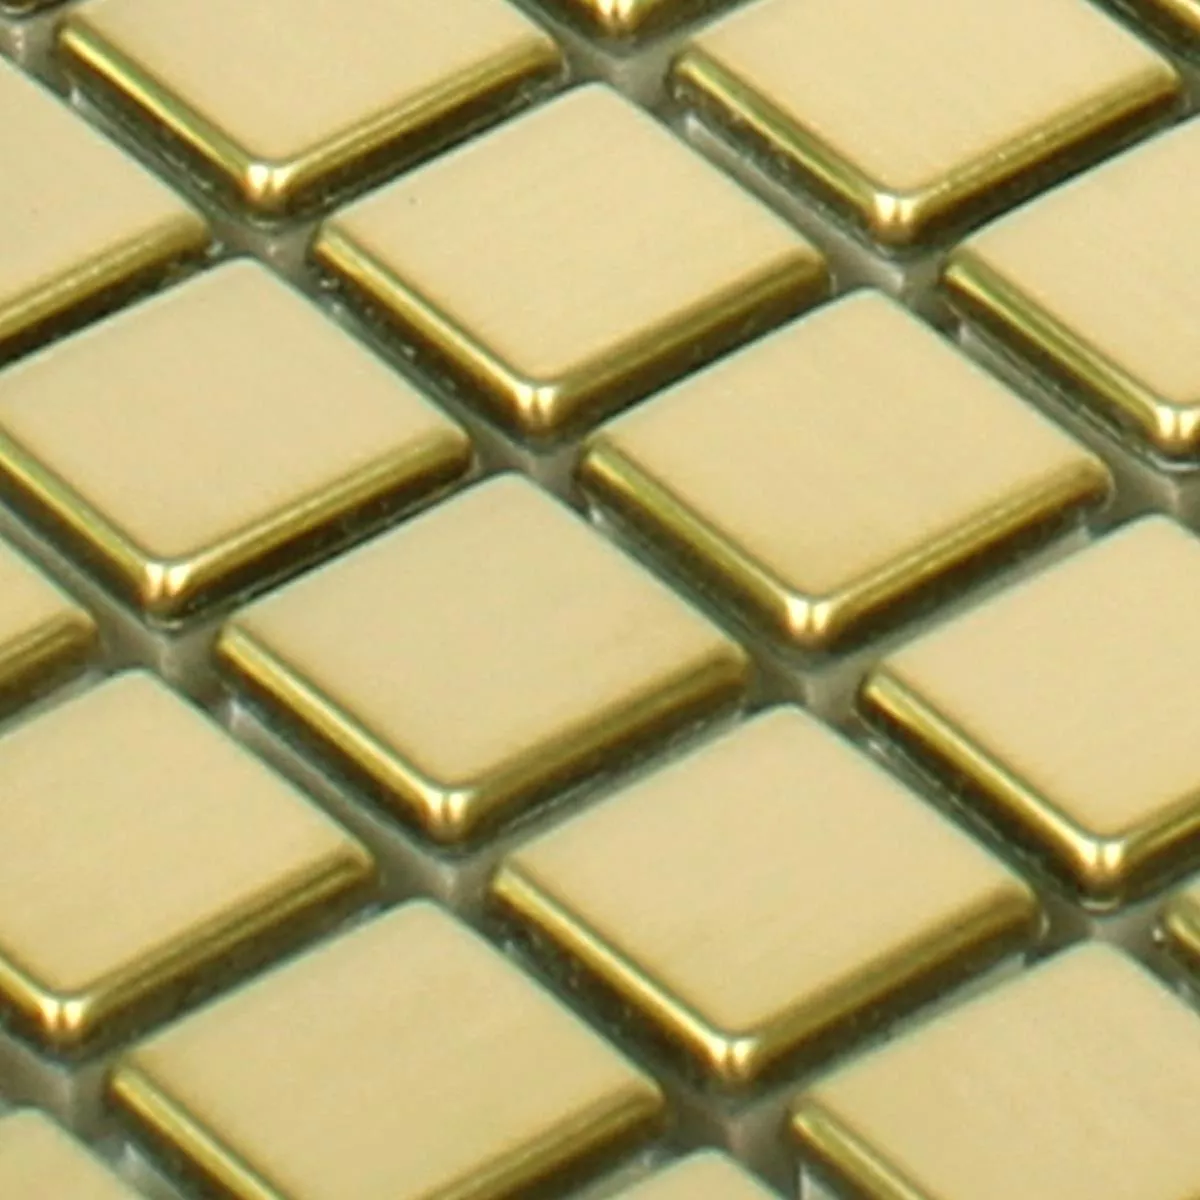 Sample Mosaic Tiles Stainless Steel Metal Baikal Gold